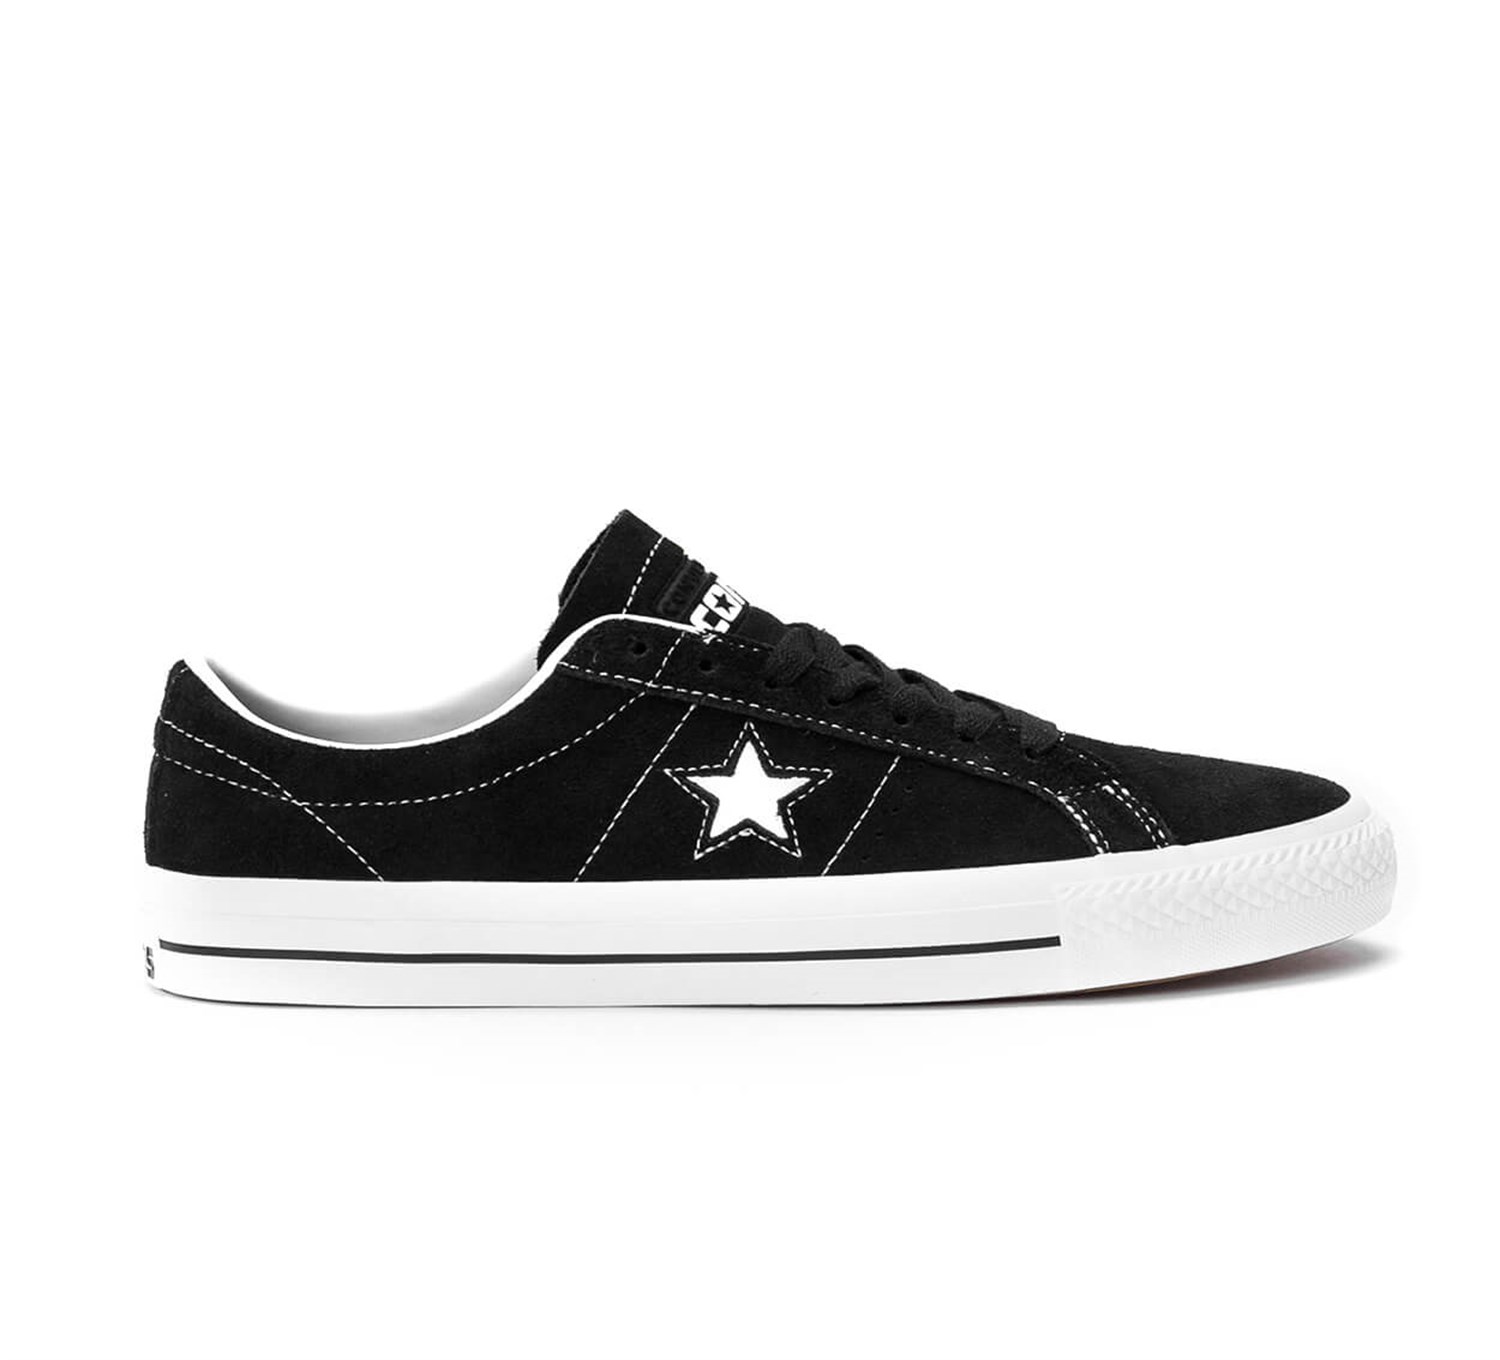 Converse One Star Pro Sneaker Erkek Ayakkabı 159579C-001